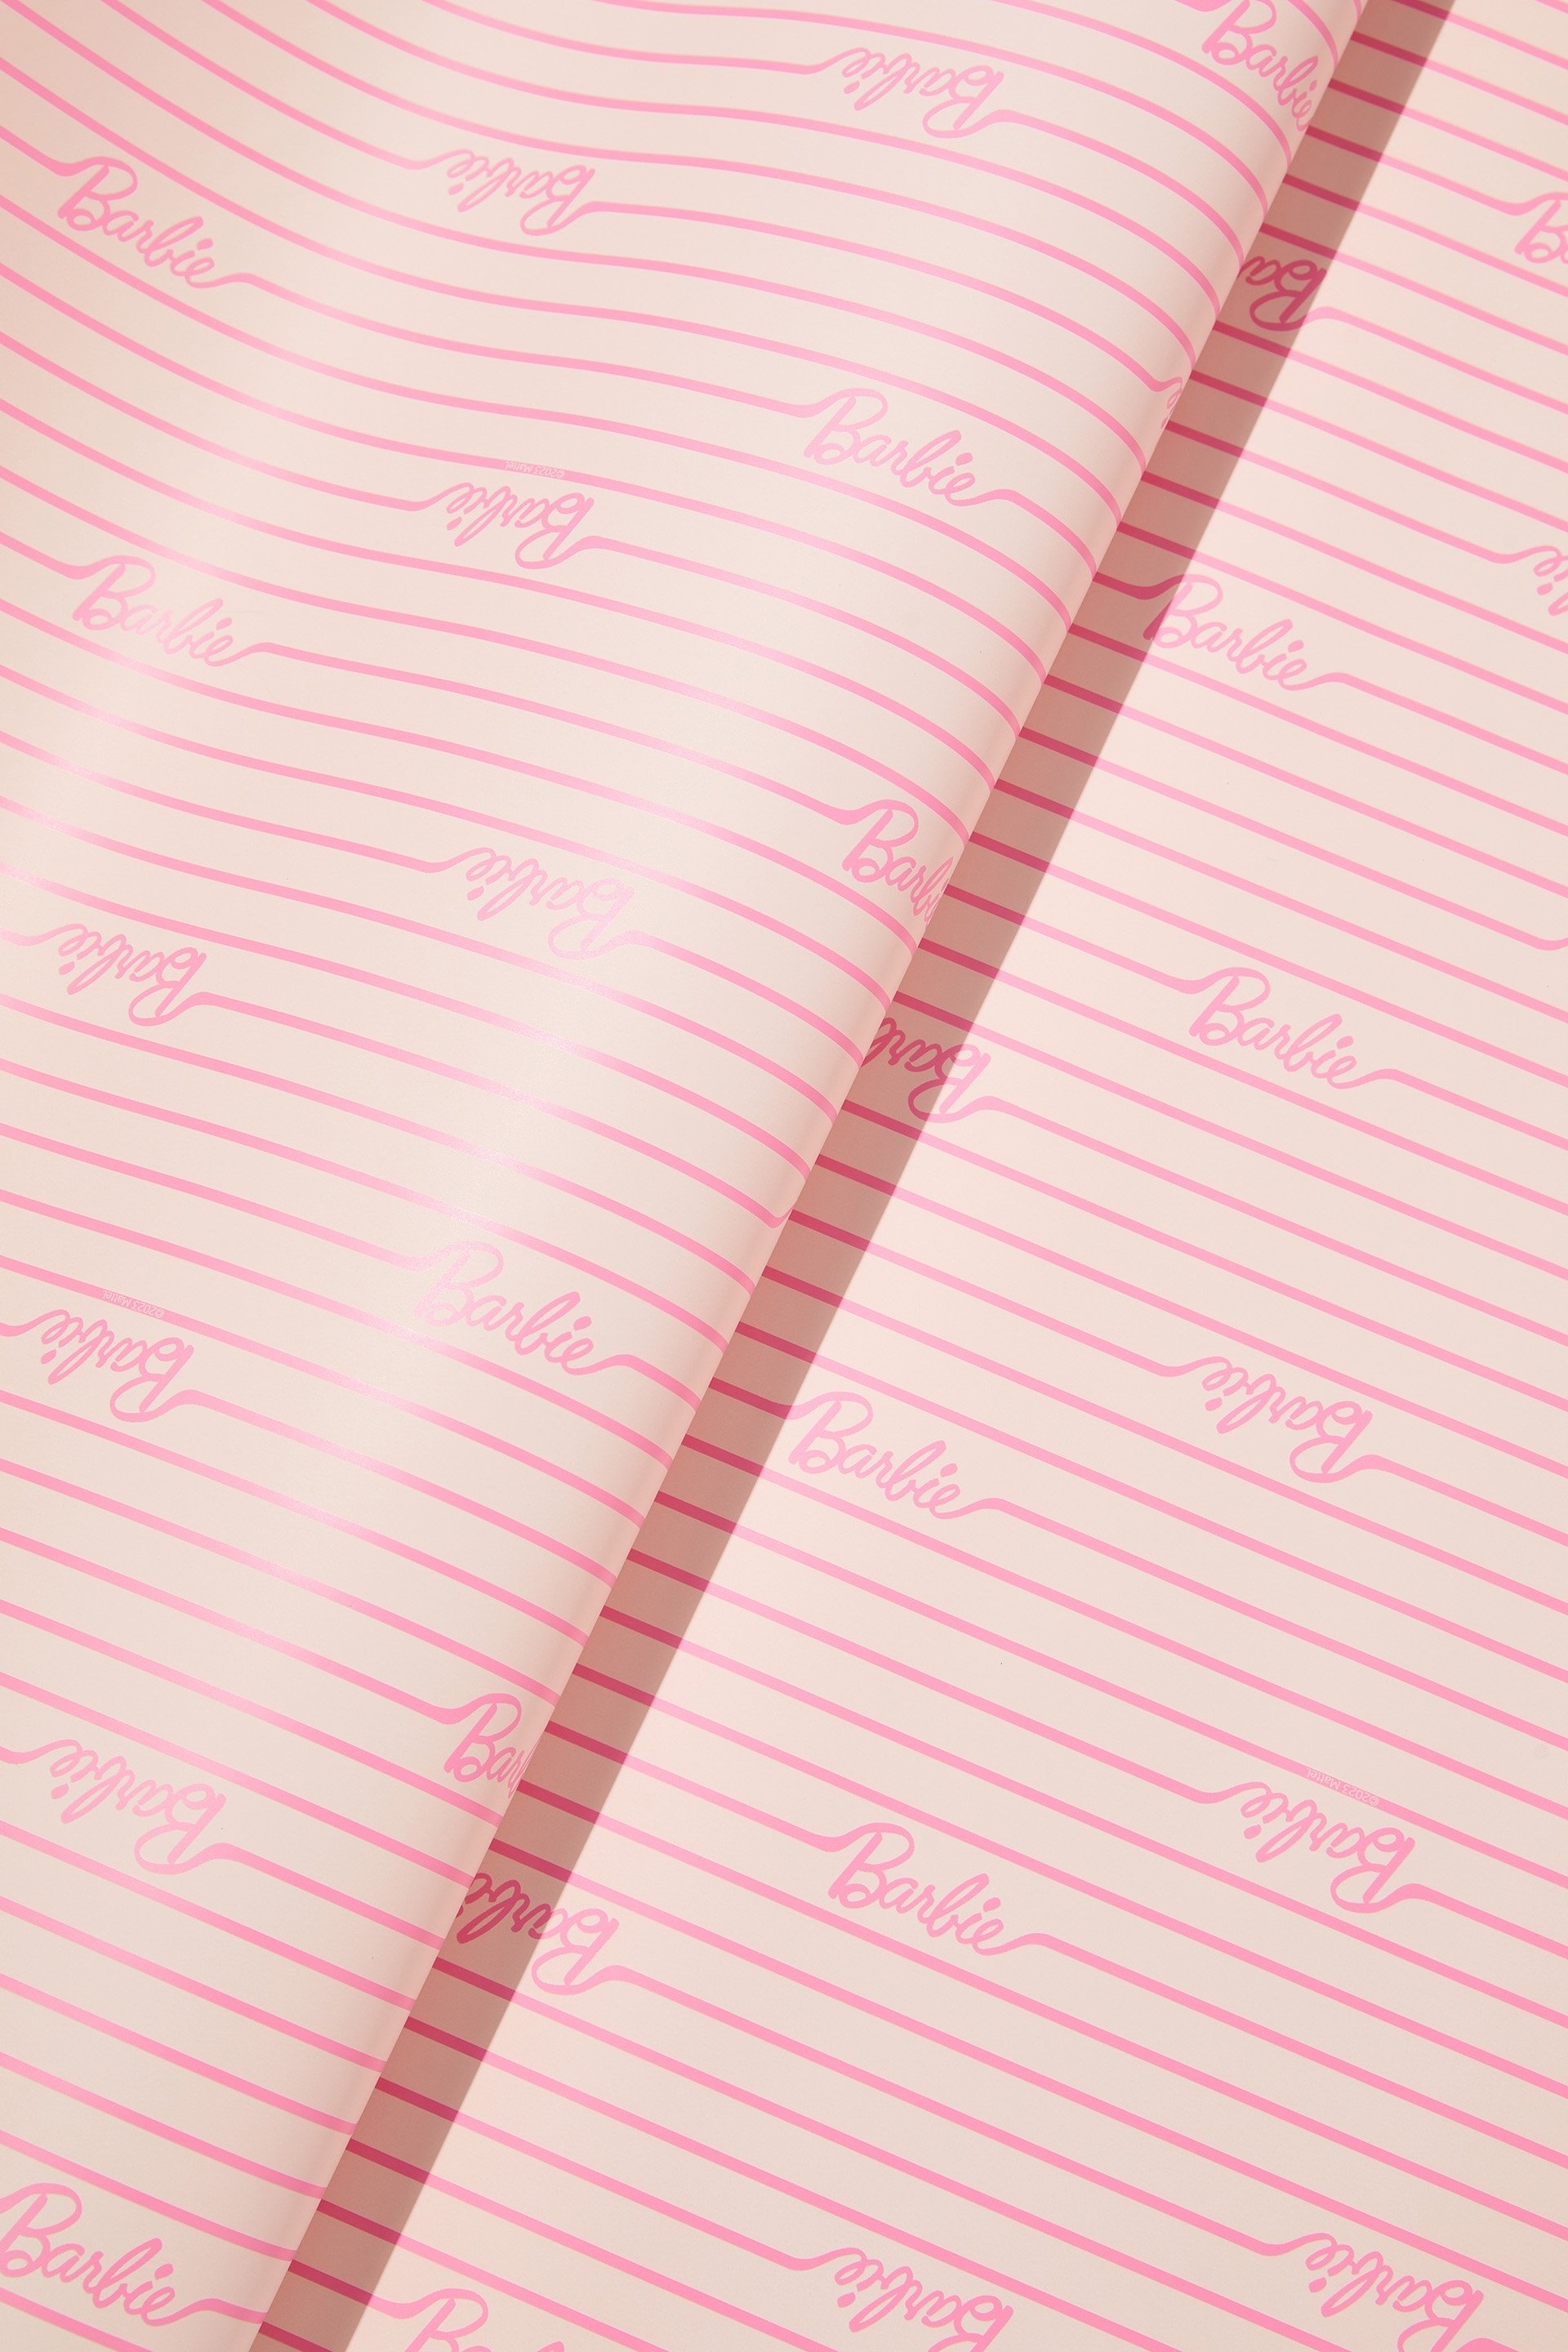 Typo - Barbie Roll Wrapping Paper - Lcn mat barbie logo stripes